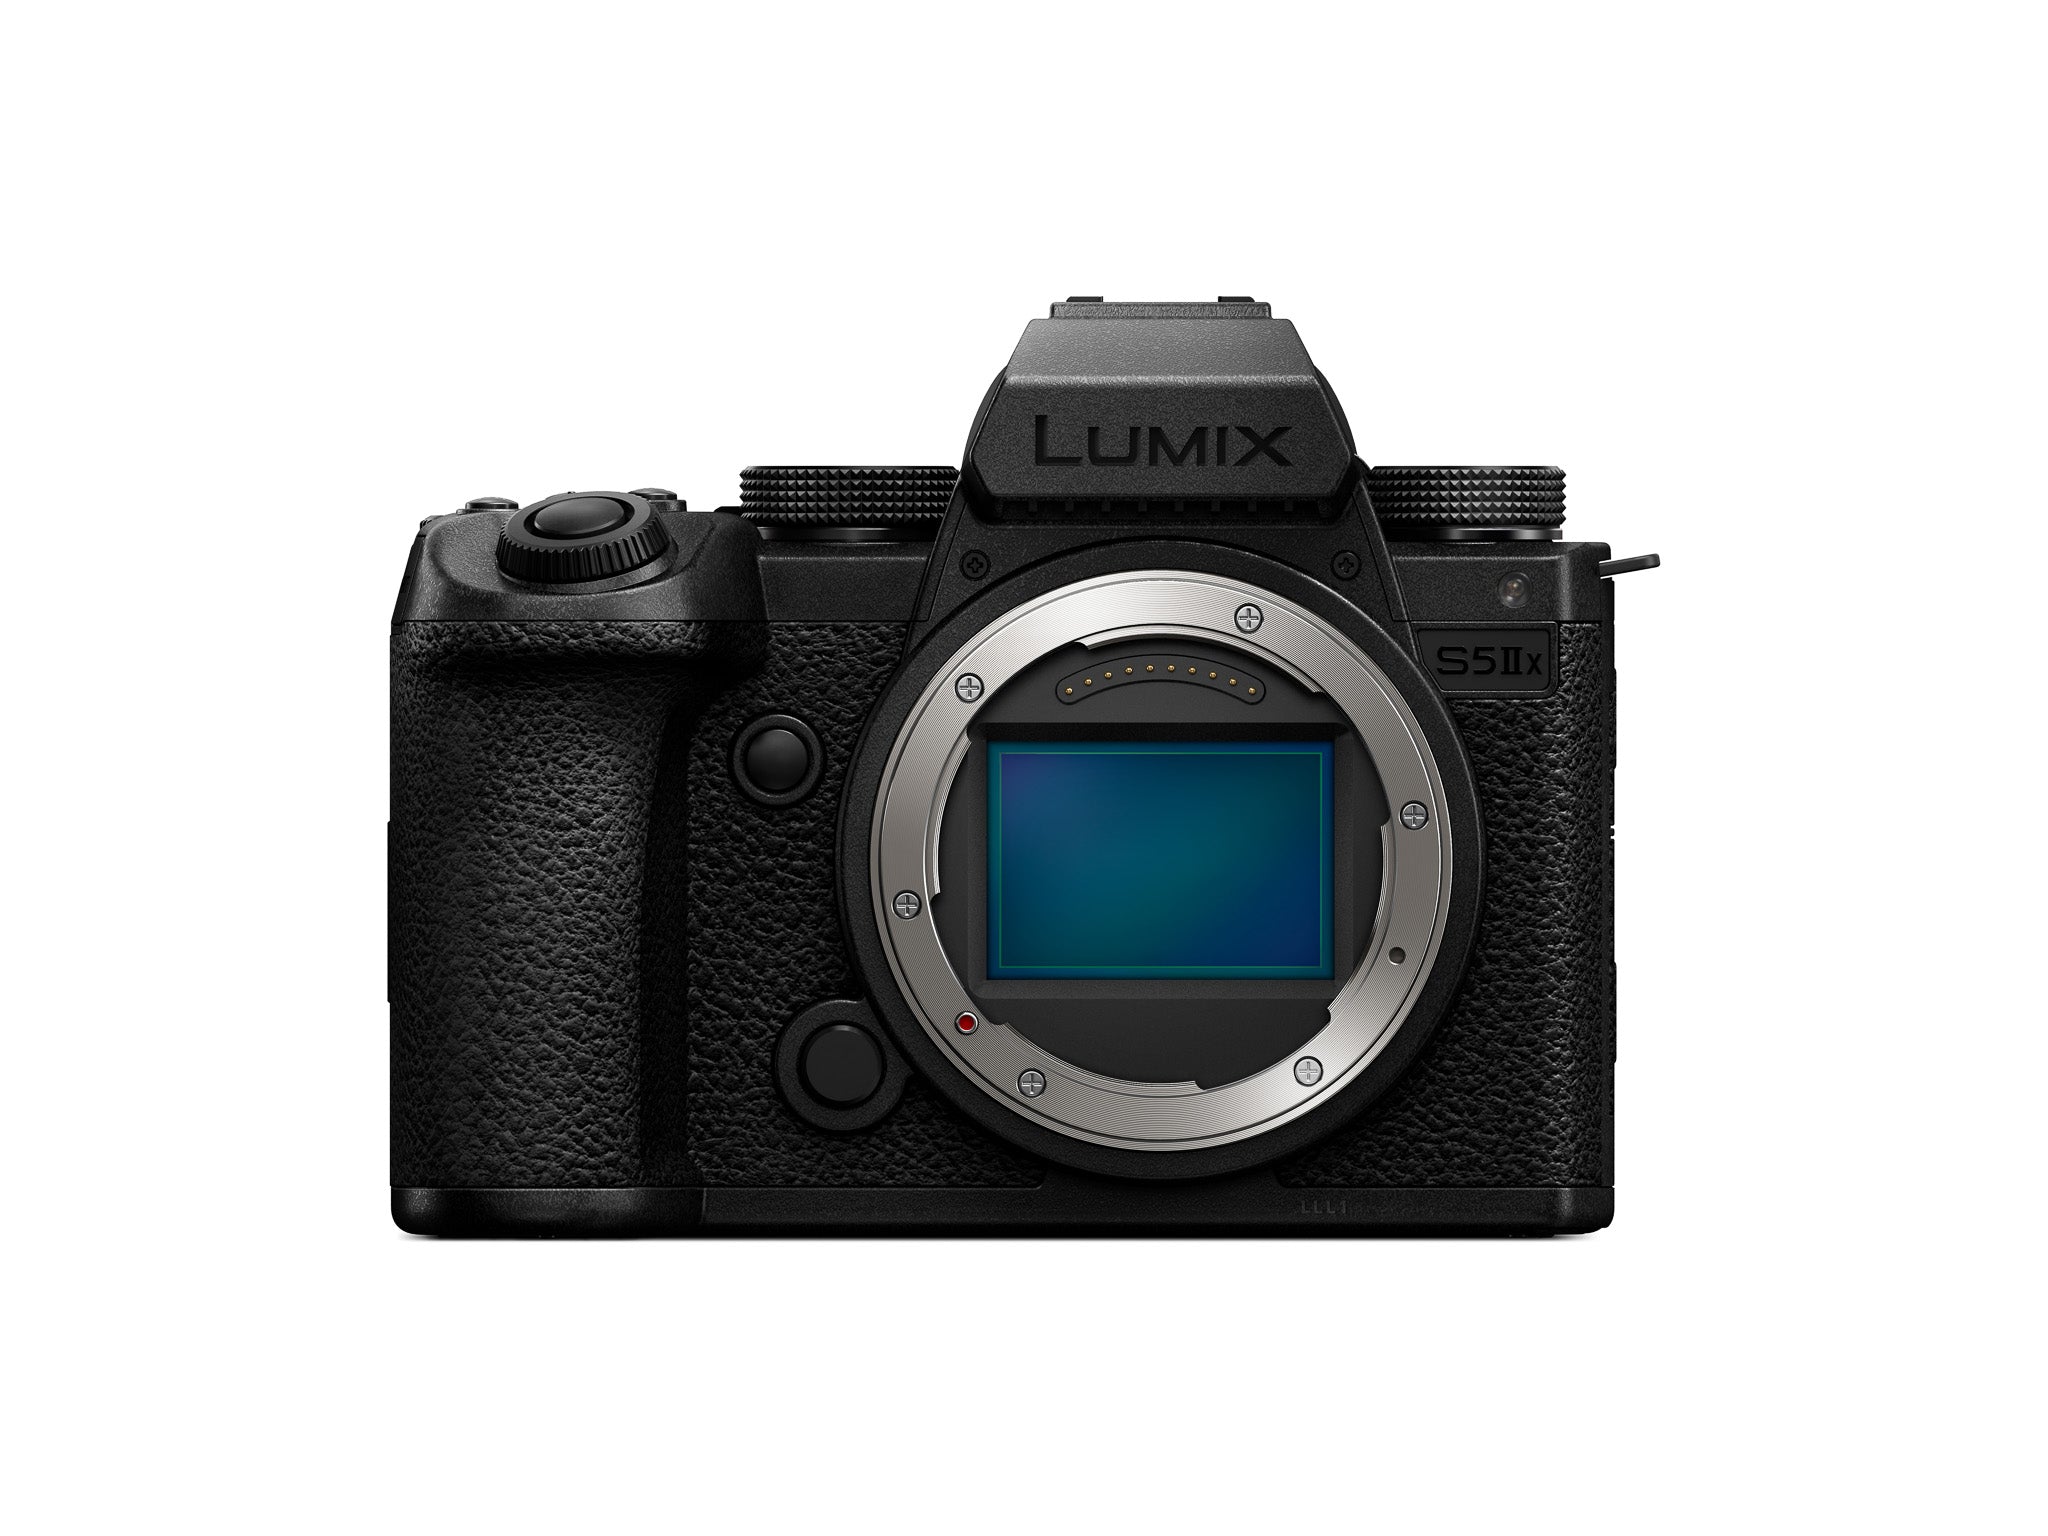 Product Image of Panasonic Lumix S5IIX Full frame Mirrorless Camera Body Only